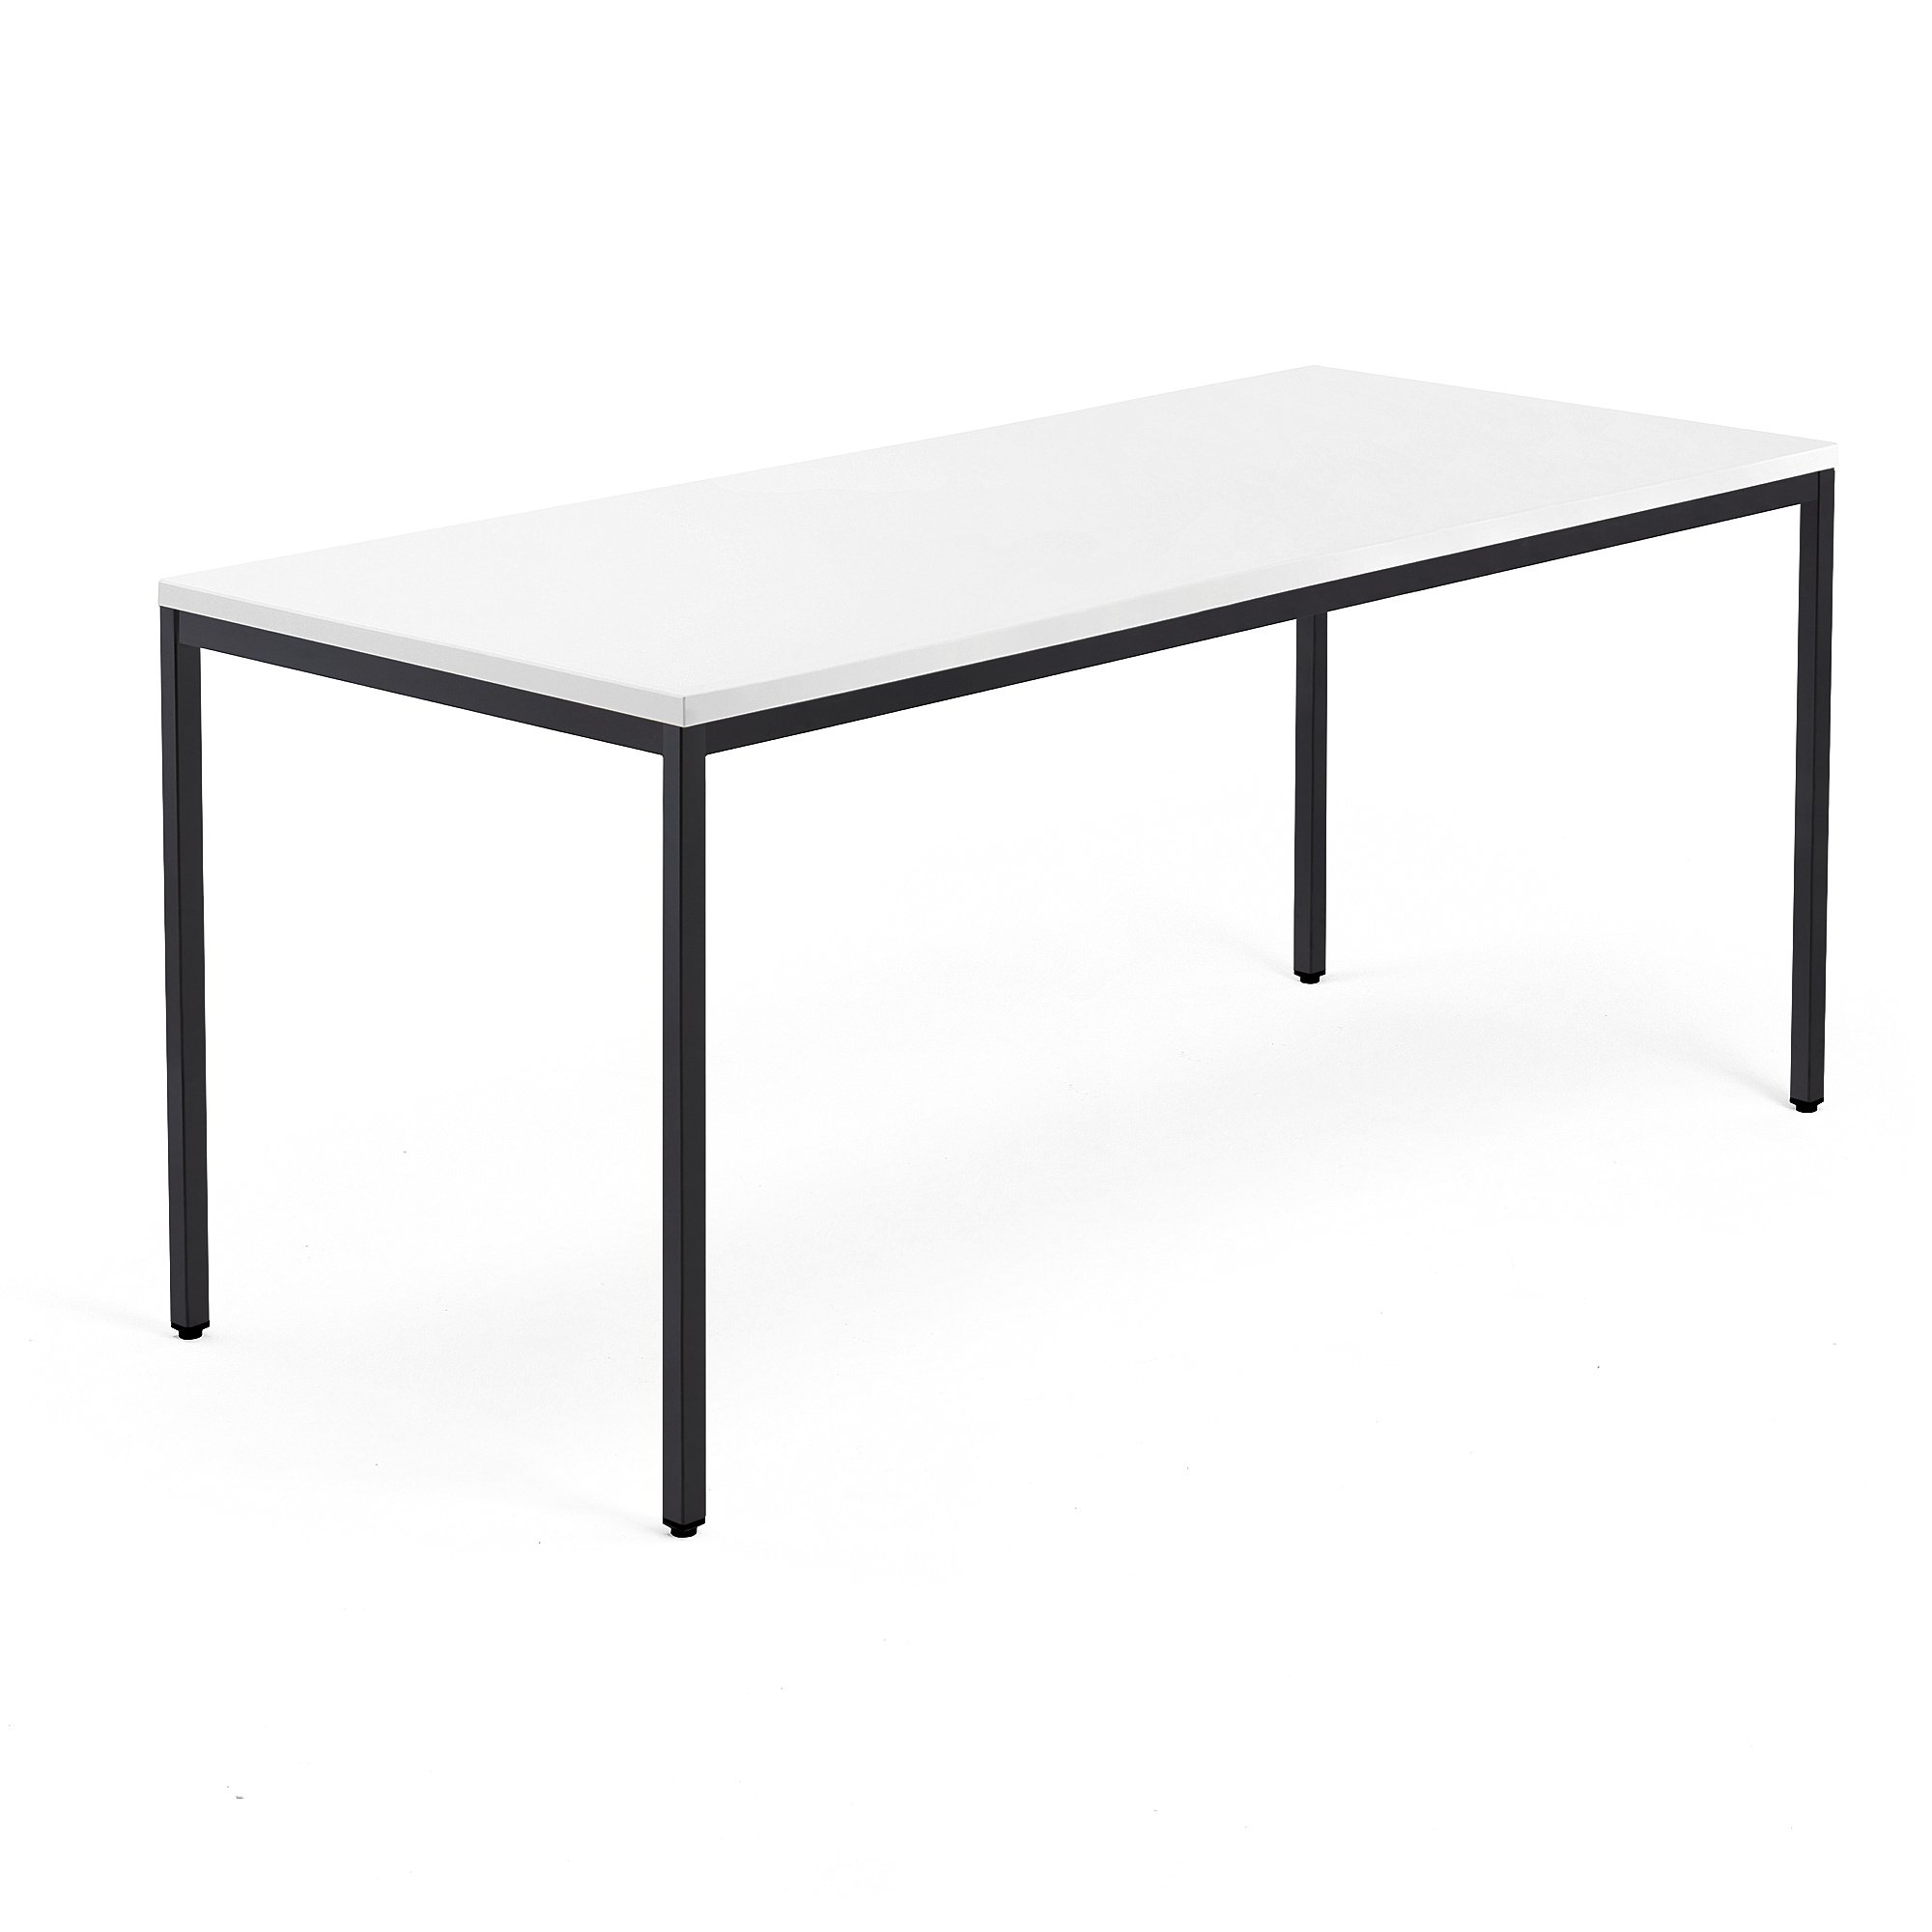 Psací stůl QBUS, 4 nohy, 1800x800 mm, černý rám, bílá